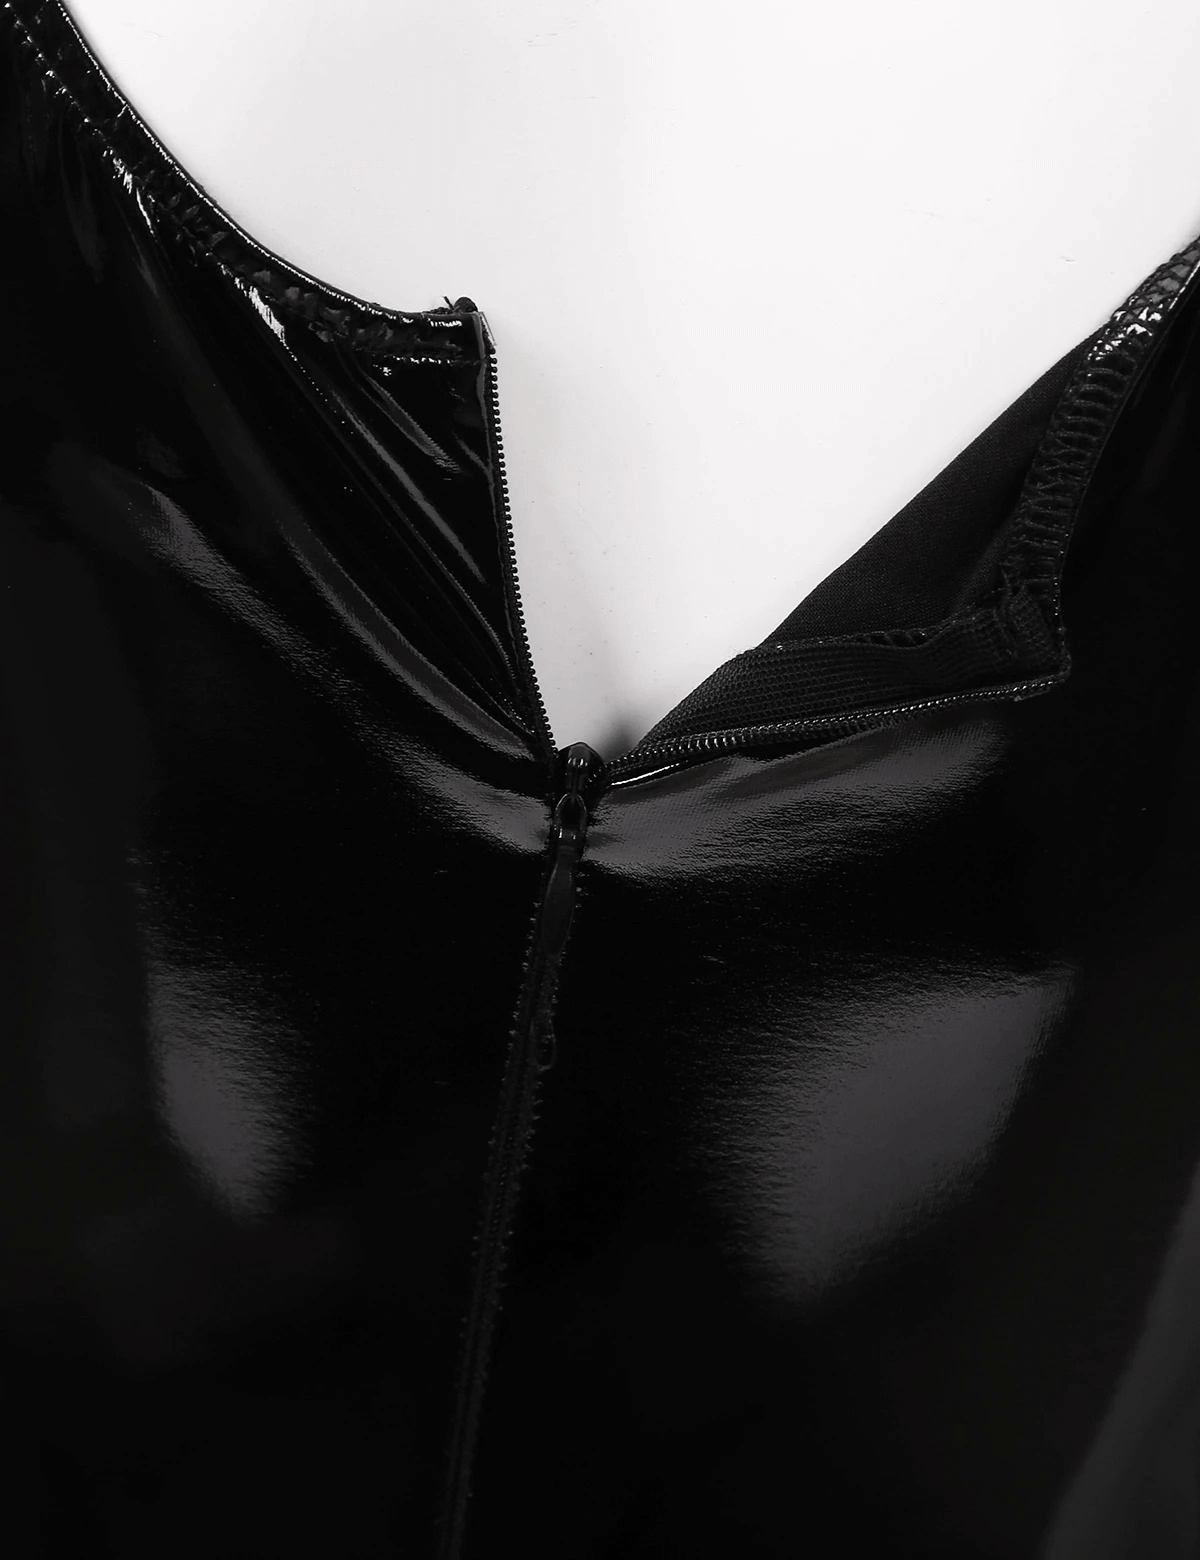 Full-Body Women's Black Jumpsuit / Wet Look Crotchless Catsuit / U-neckline Sleeveless Leotard - HARD'N'HEAVY